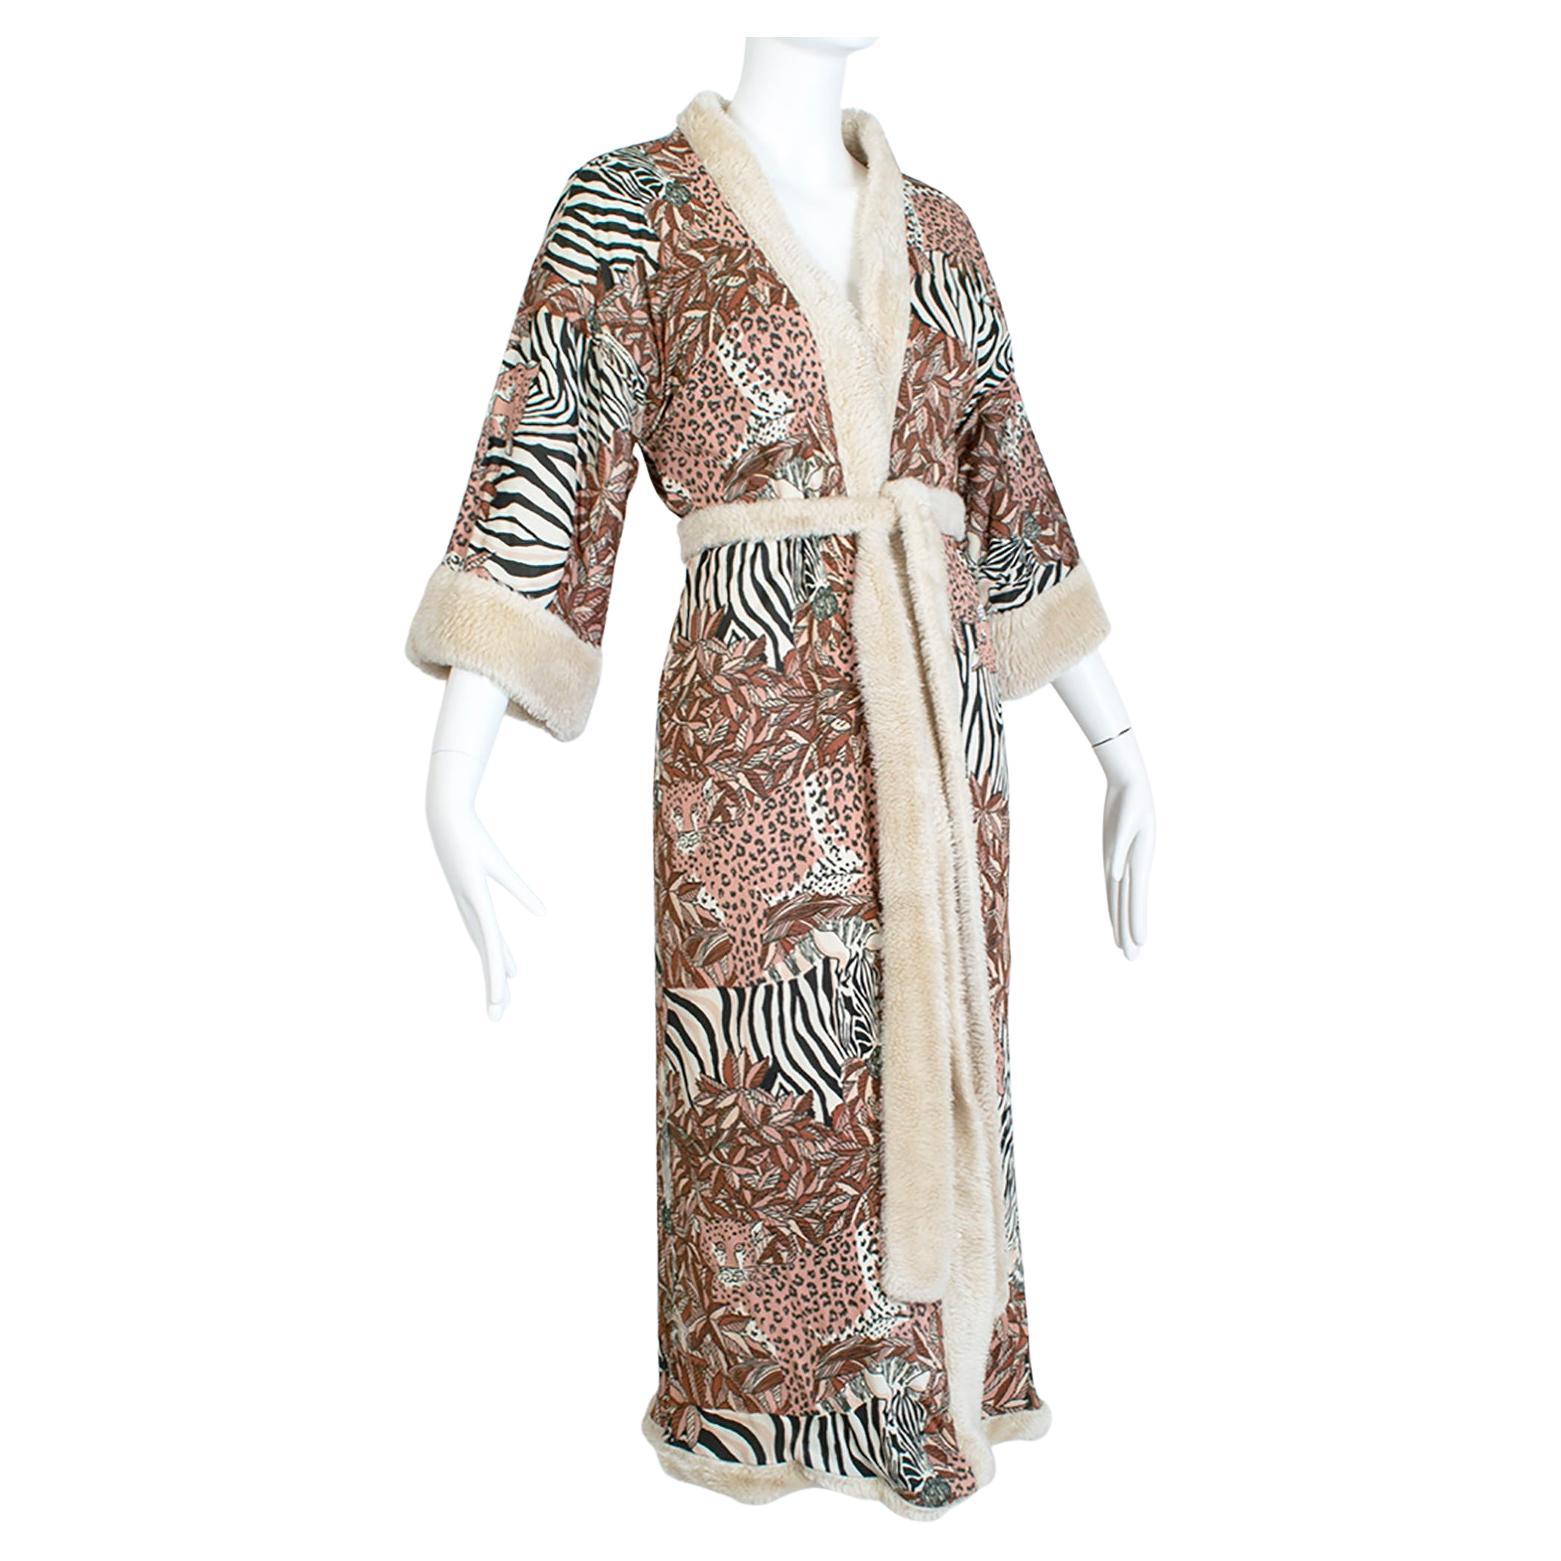 Reversible Ivory Faux Fur Robe w Leonard Paris-Inspired Jungle Lining - M, 1960s